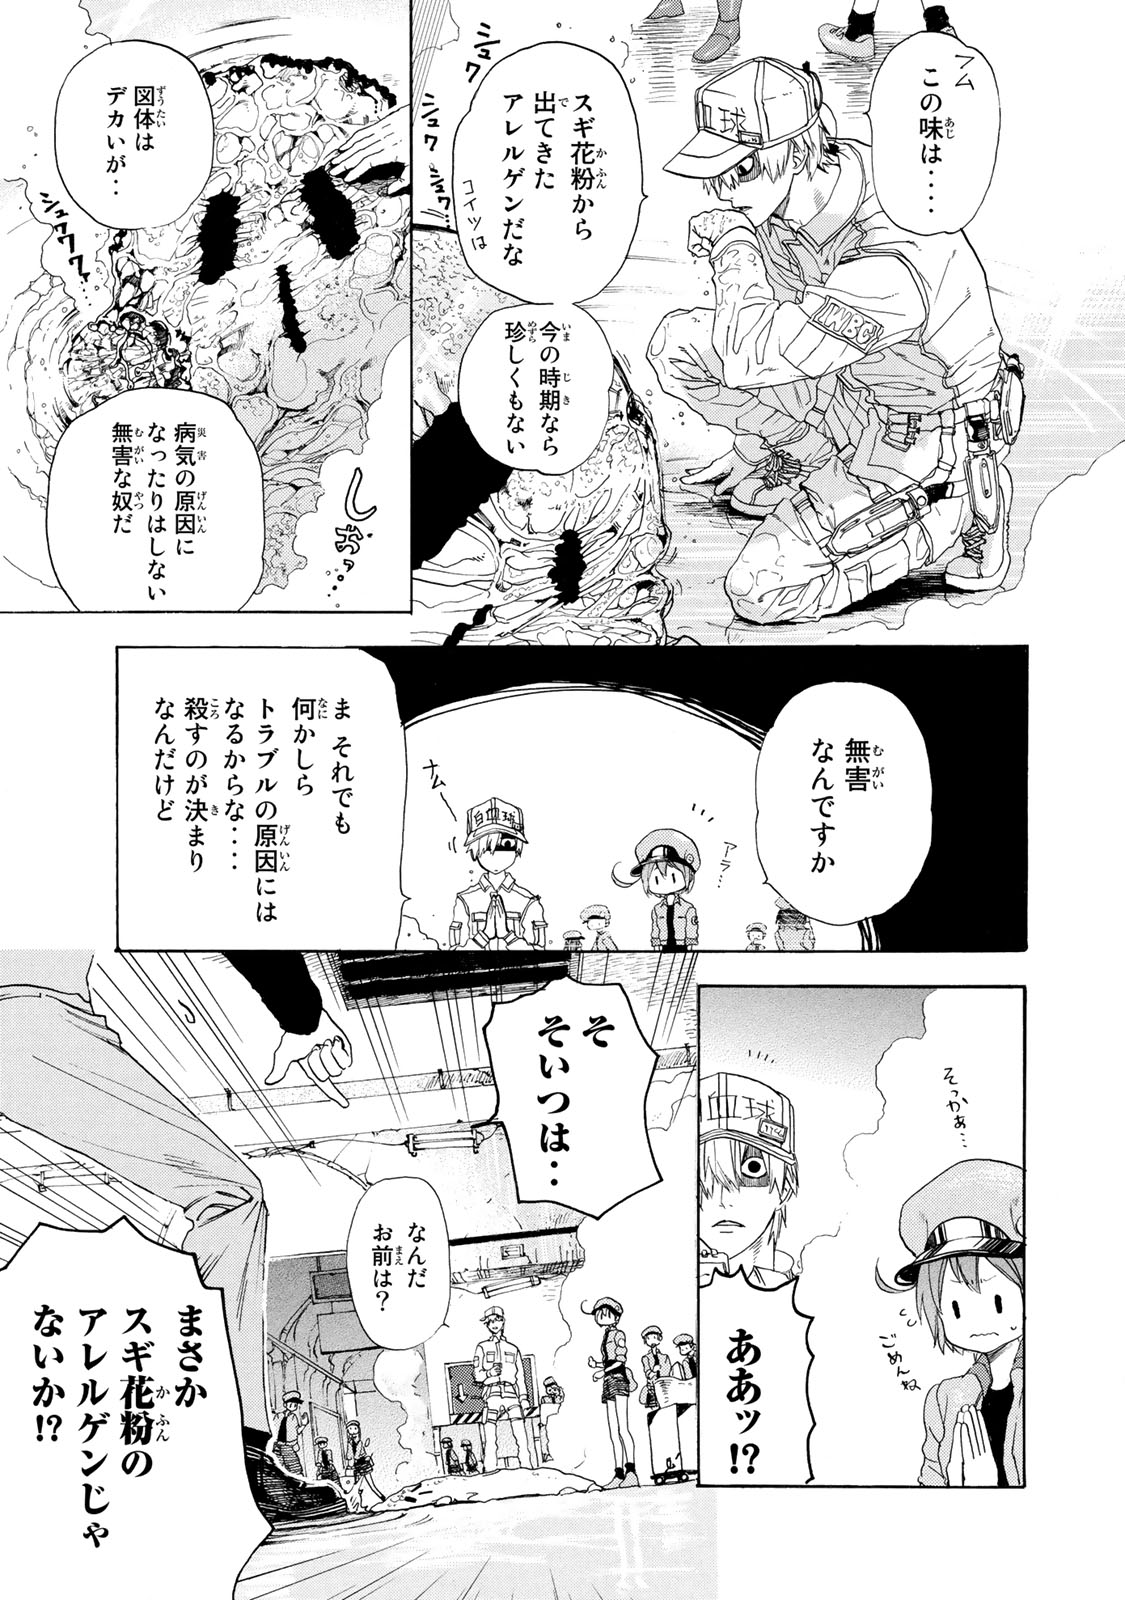 Hataraku Saibou - Chapter 2 - Page 9